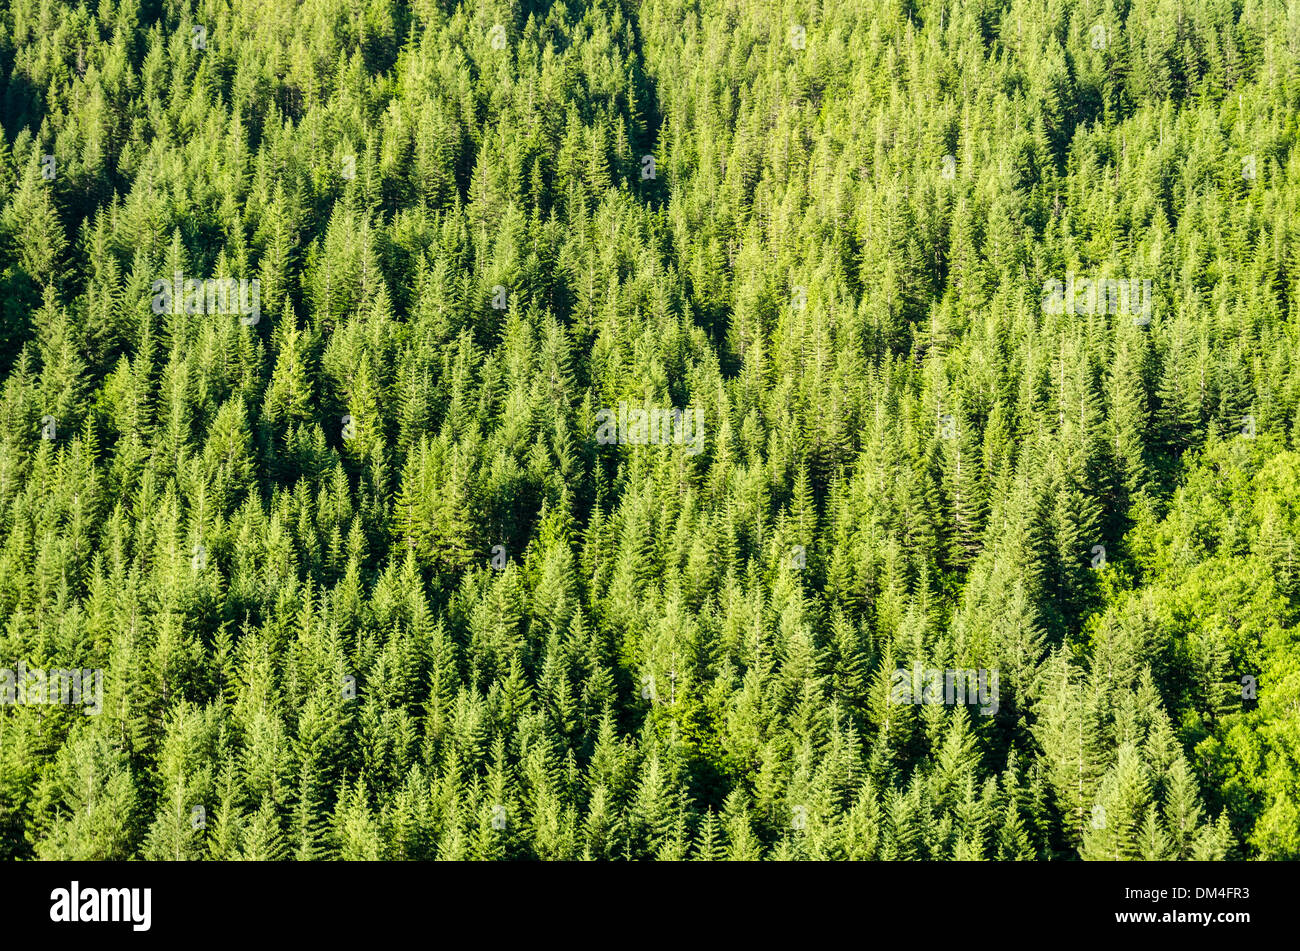 https://c8.alamy.com/comp/DM4FR3/dense-beautiful-green-pine-tree-forest-in-oregon-DM4FR3.jpg